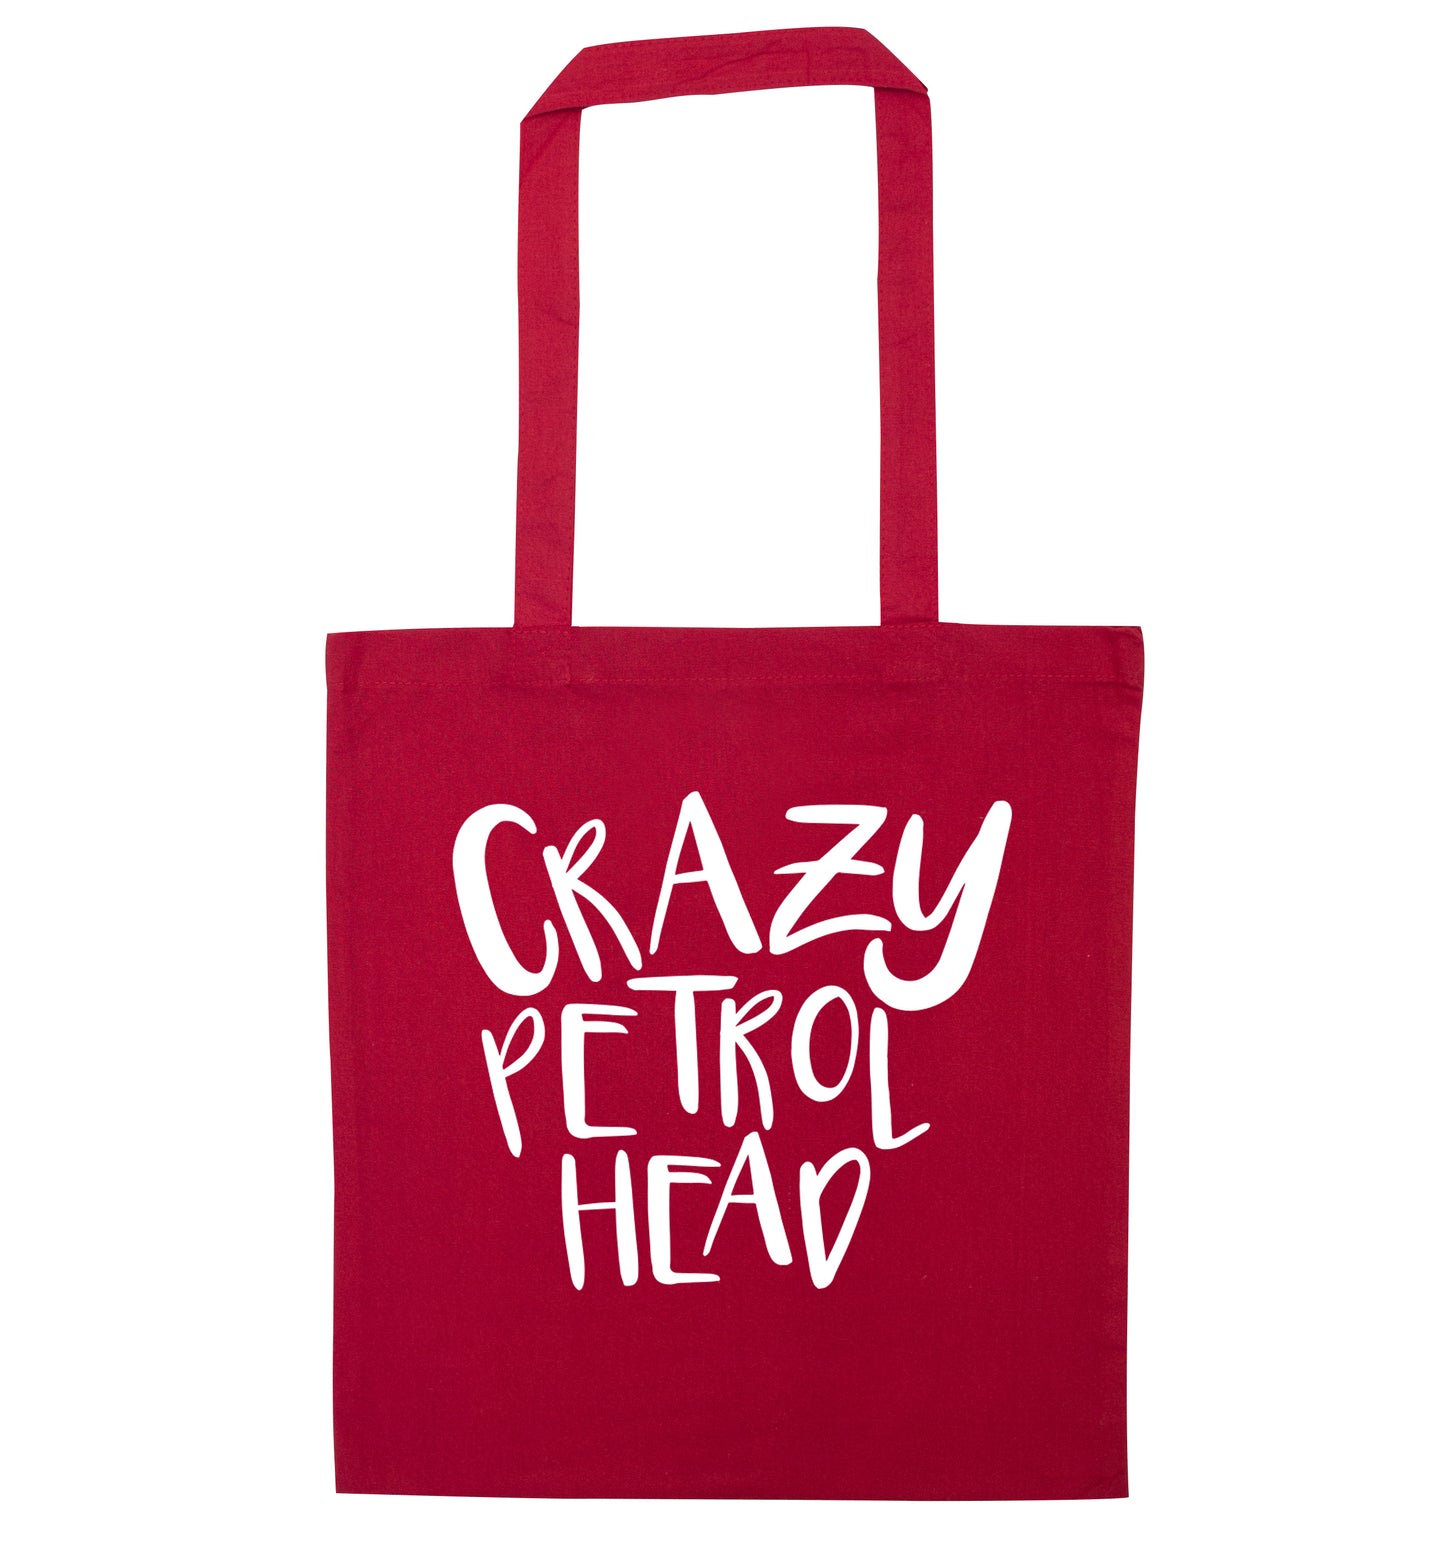 Crazy petrol head red tote bag